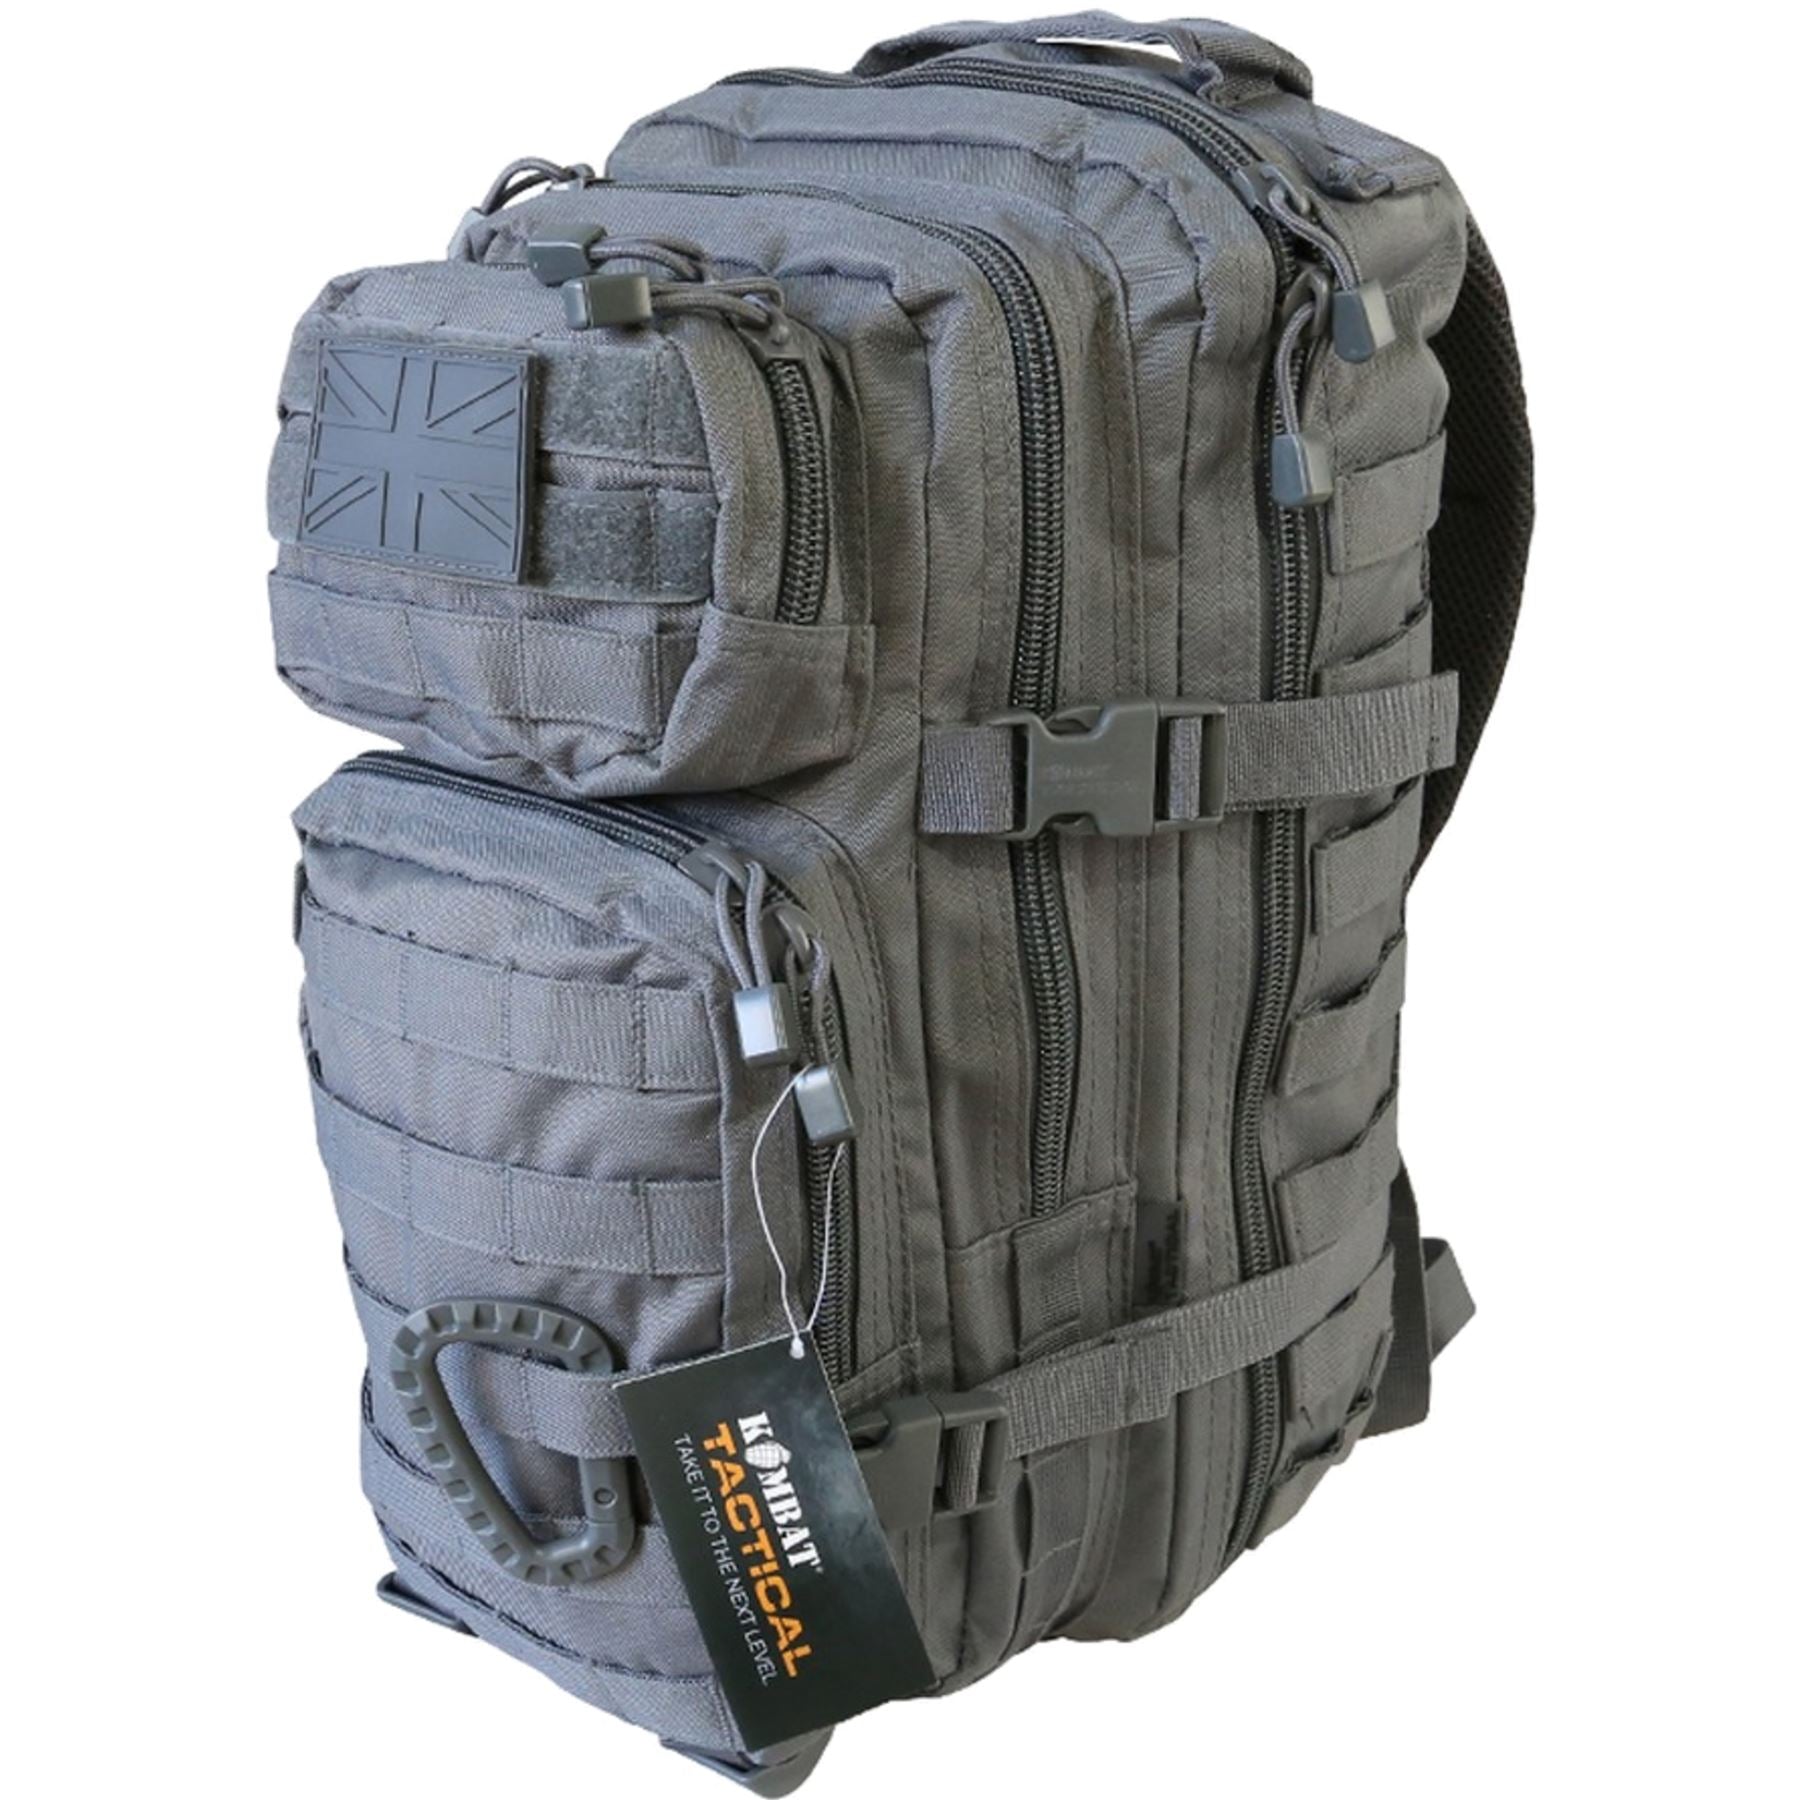 Kombat UK Small Tactical Army Assault Military Molle Bag Back Pack Rucksack 28L